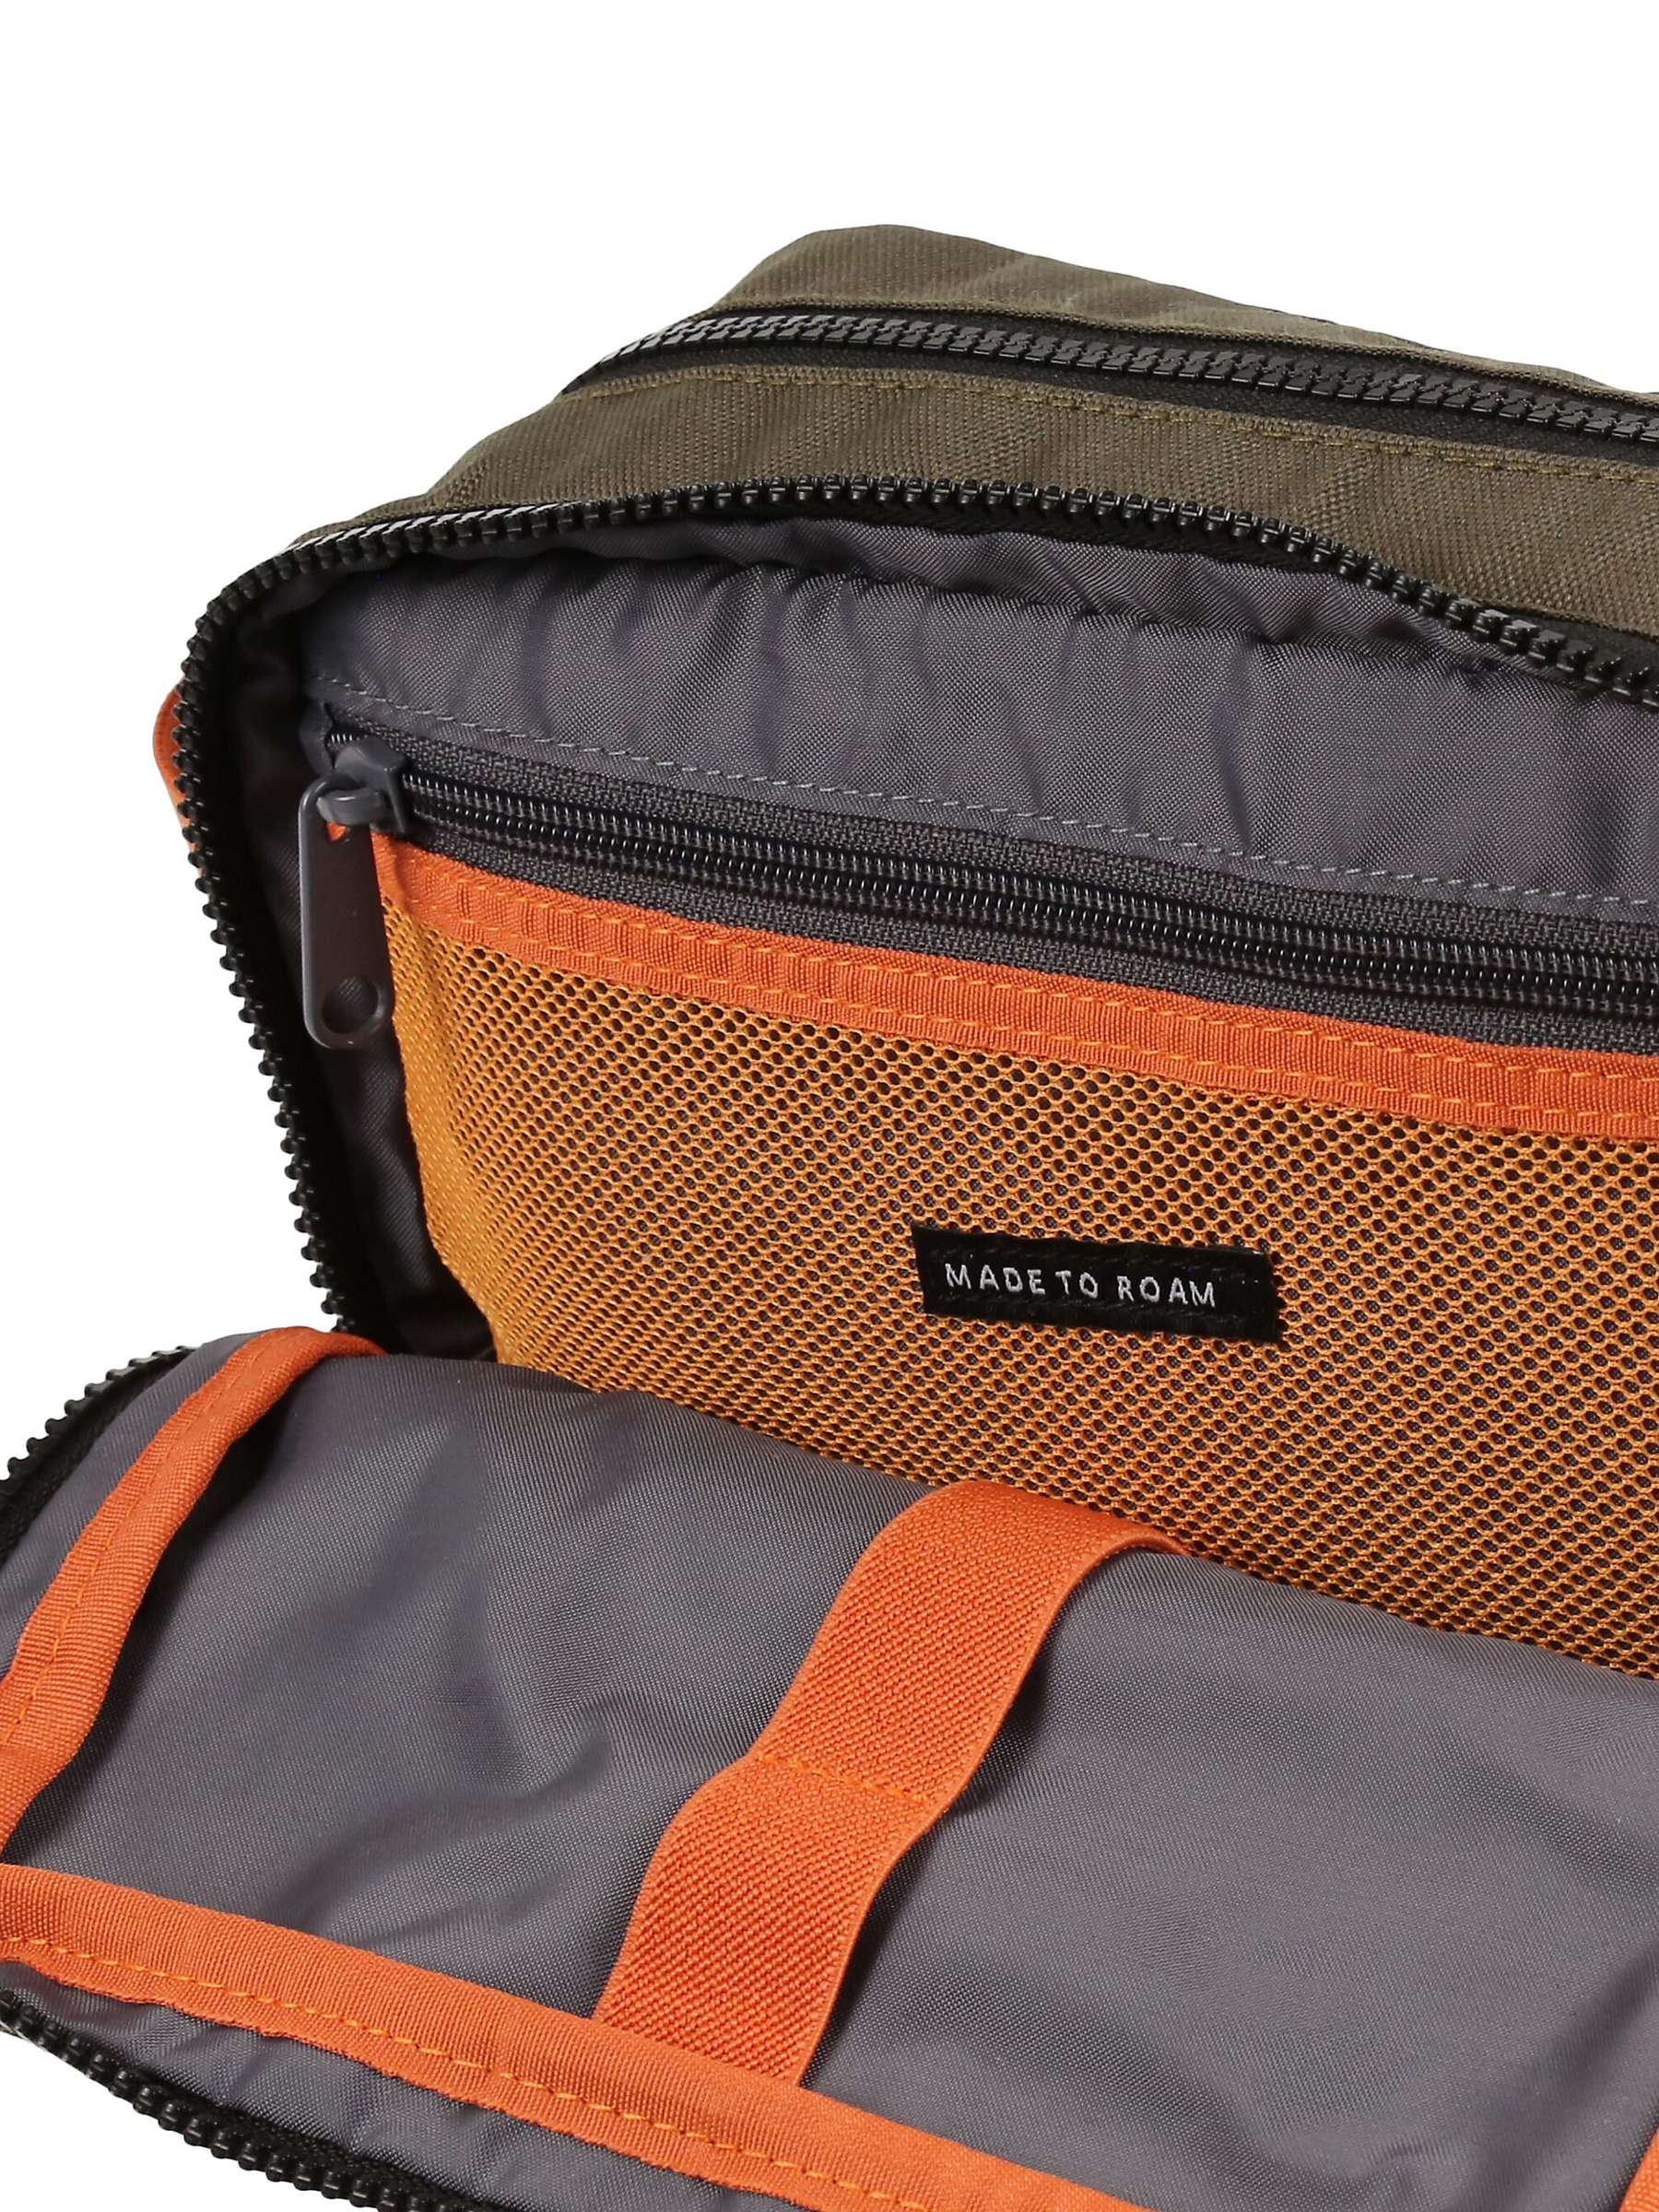 Buy Passenger Travel Wash Bag, Black/Khaki Online at johnlewis.com